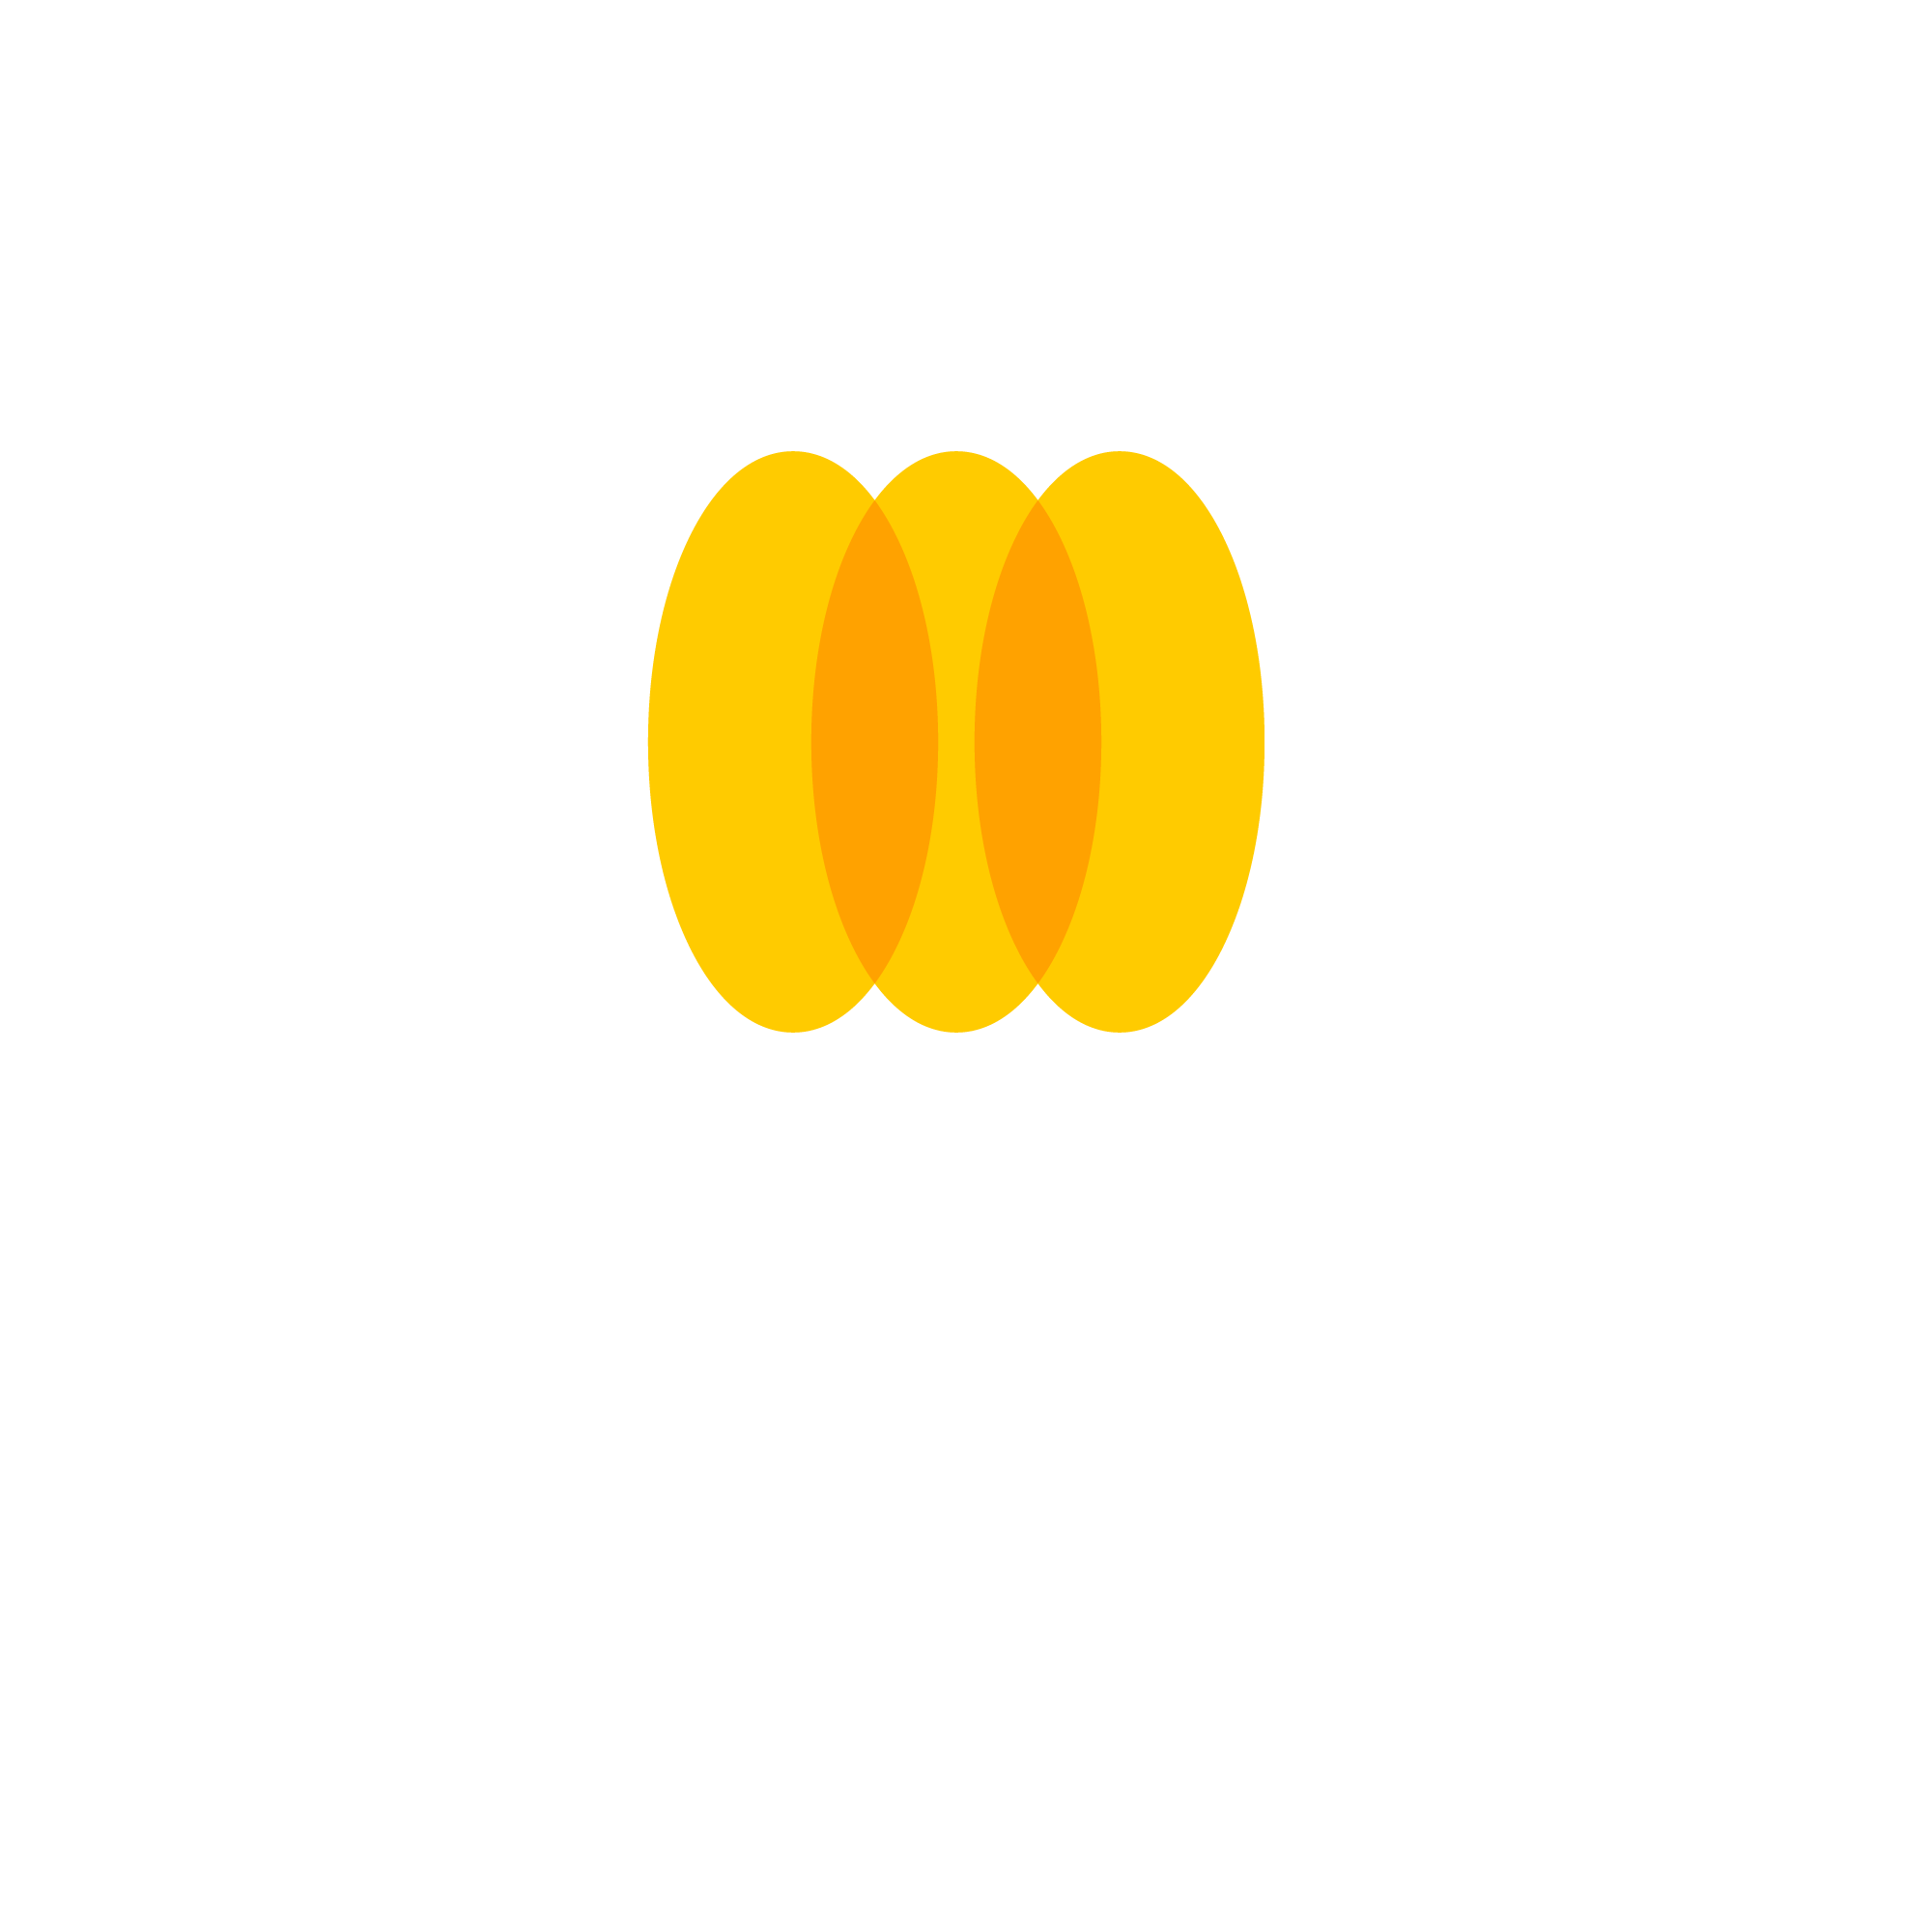 YelloPol